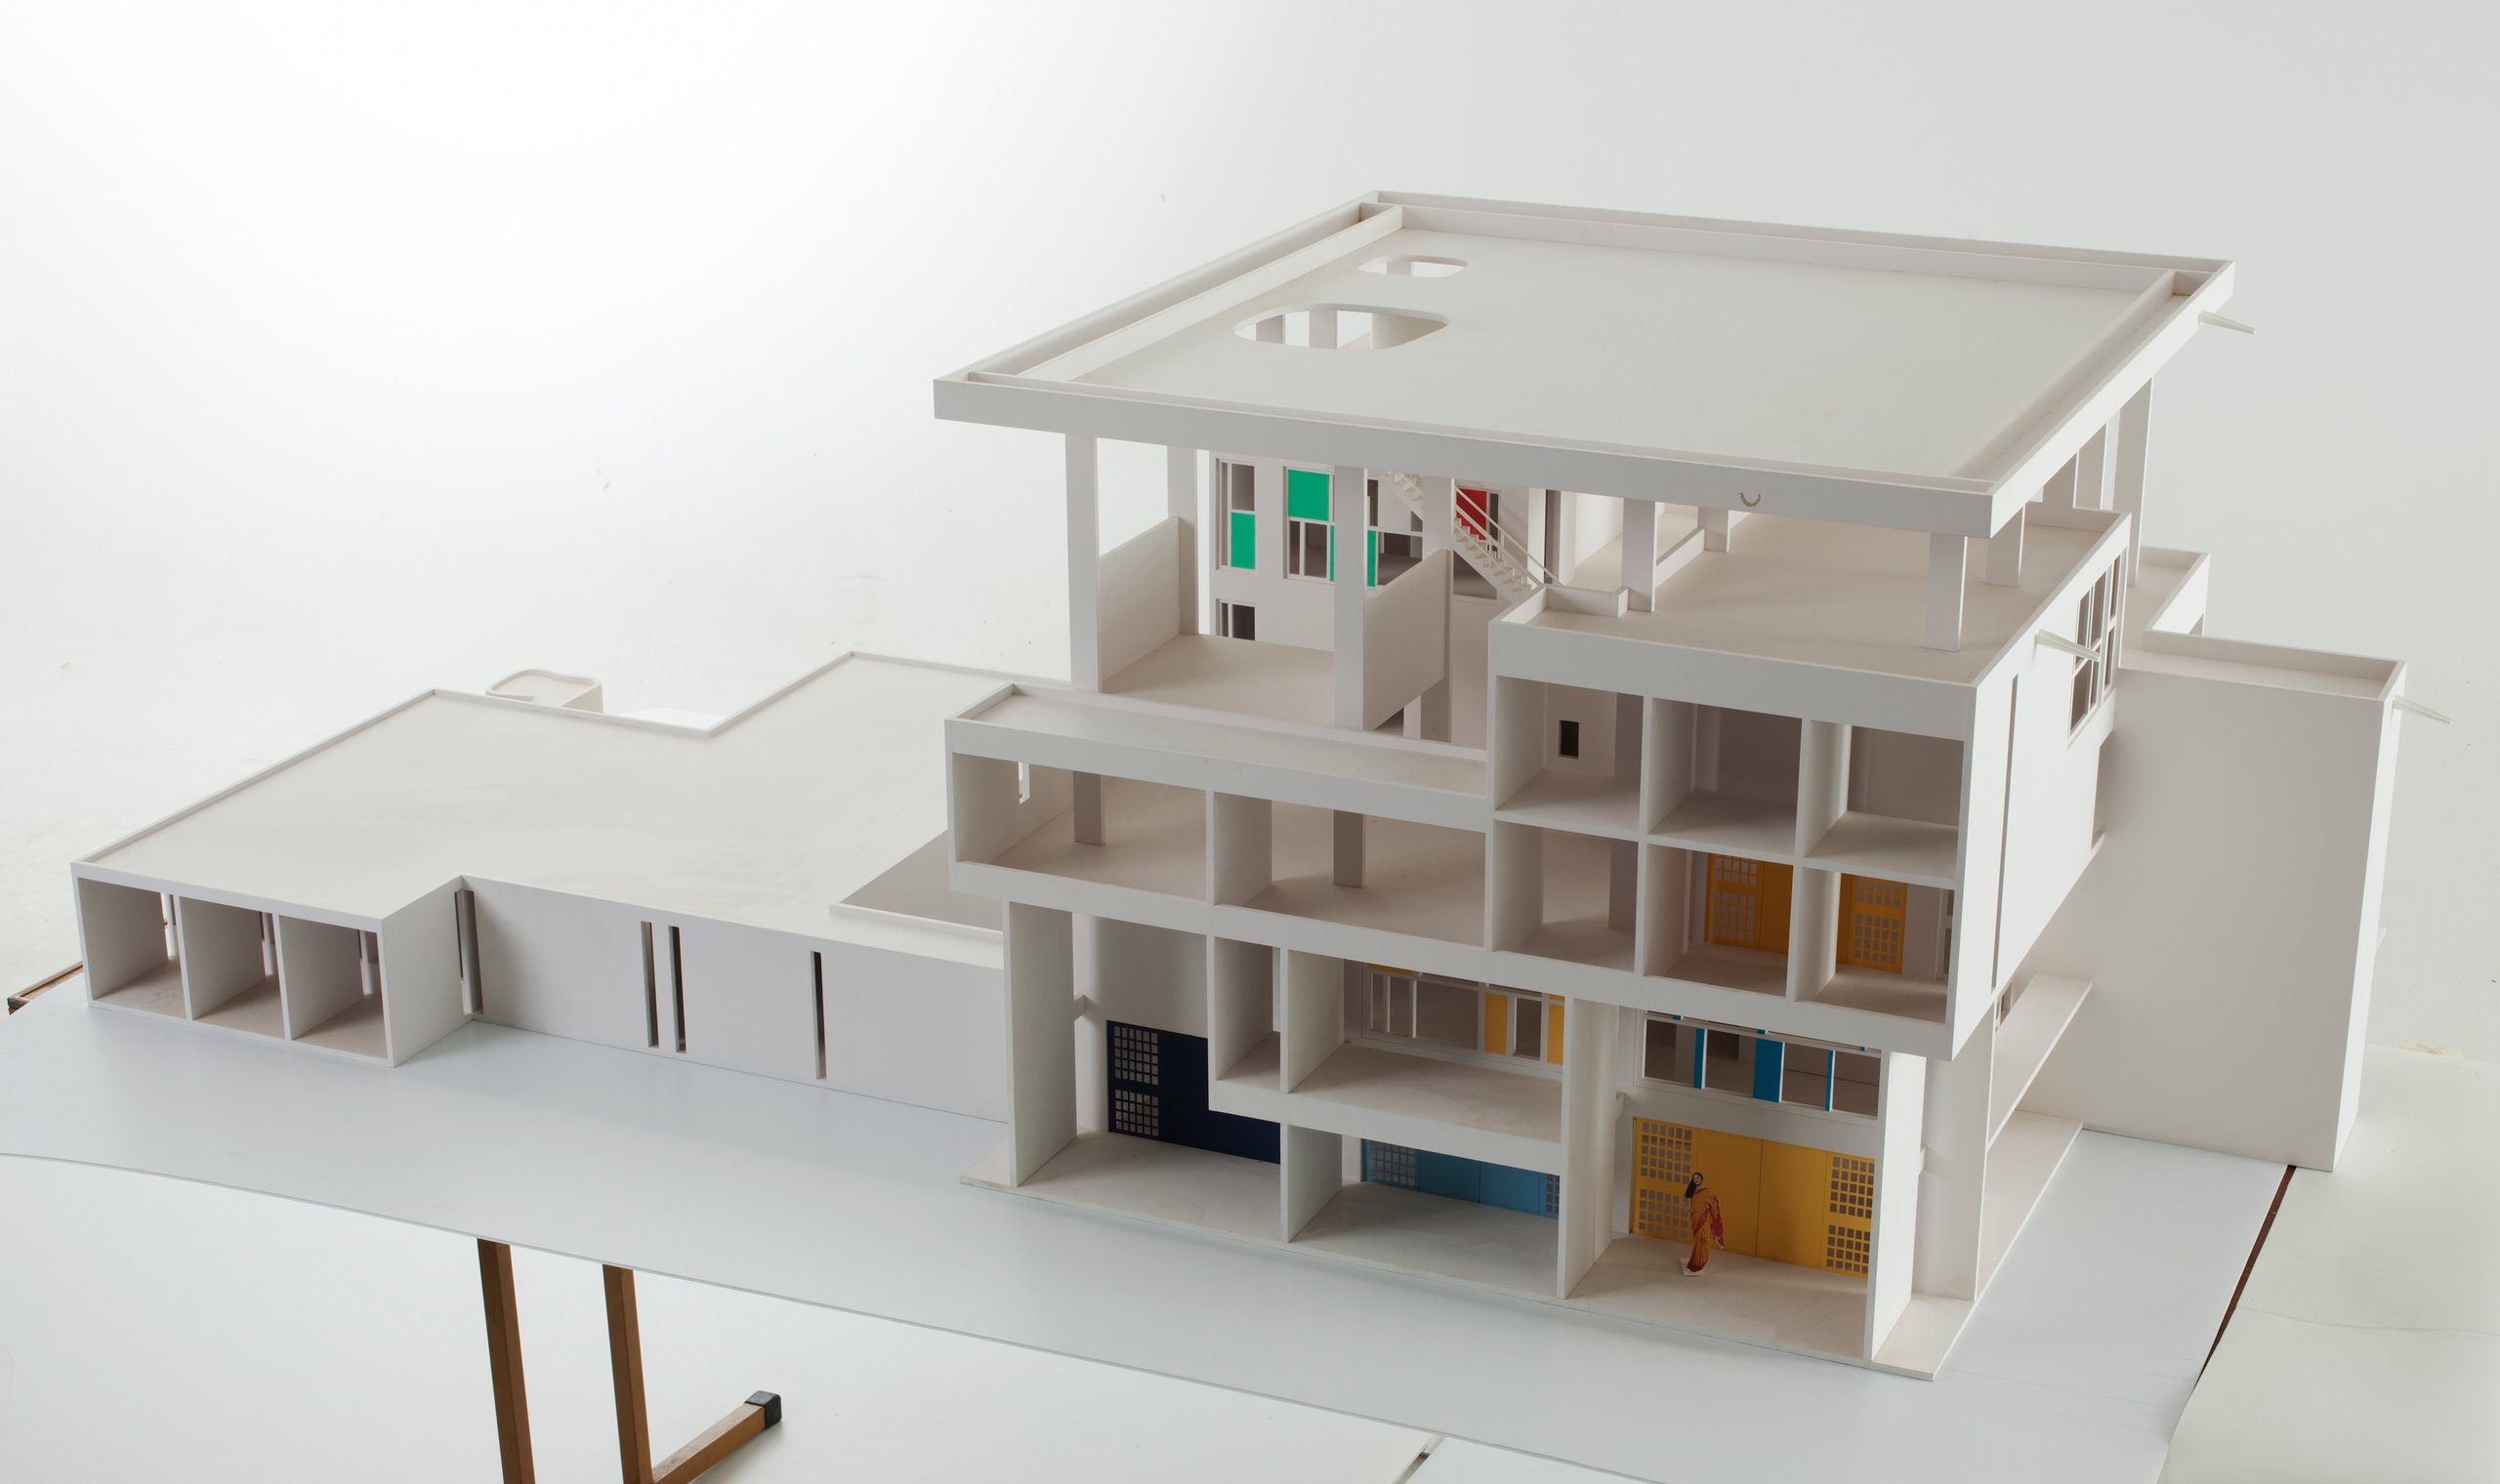 Model of Villa Shodhan designed by Le Corbusier